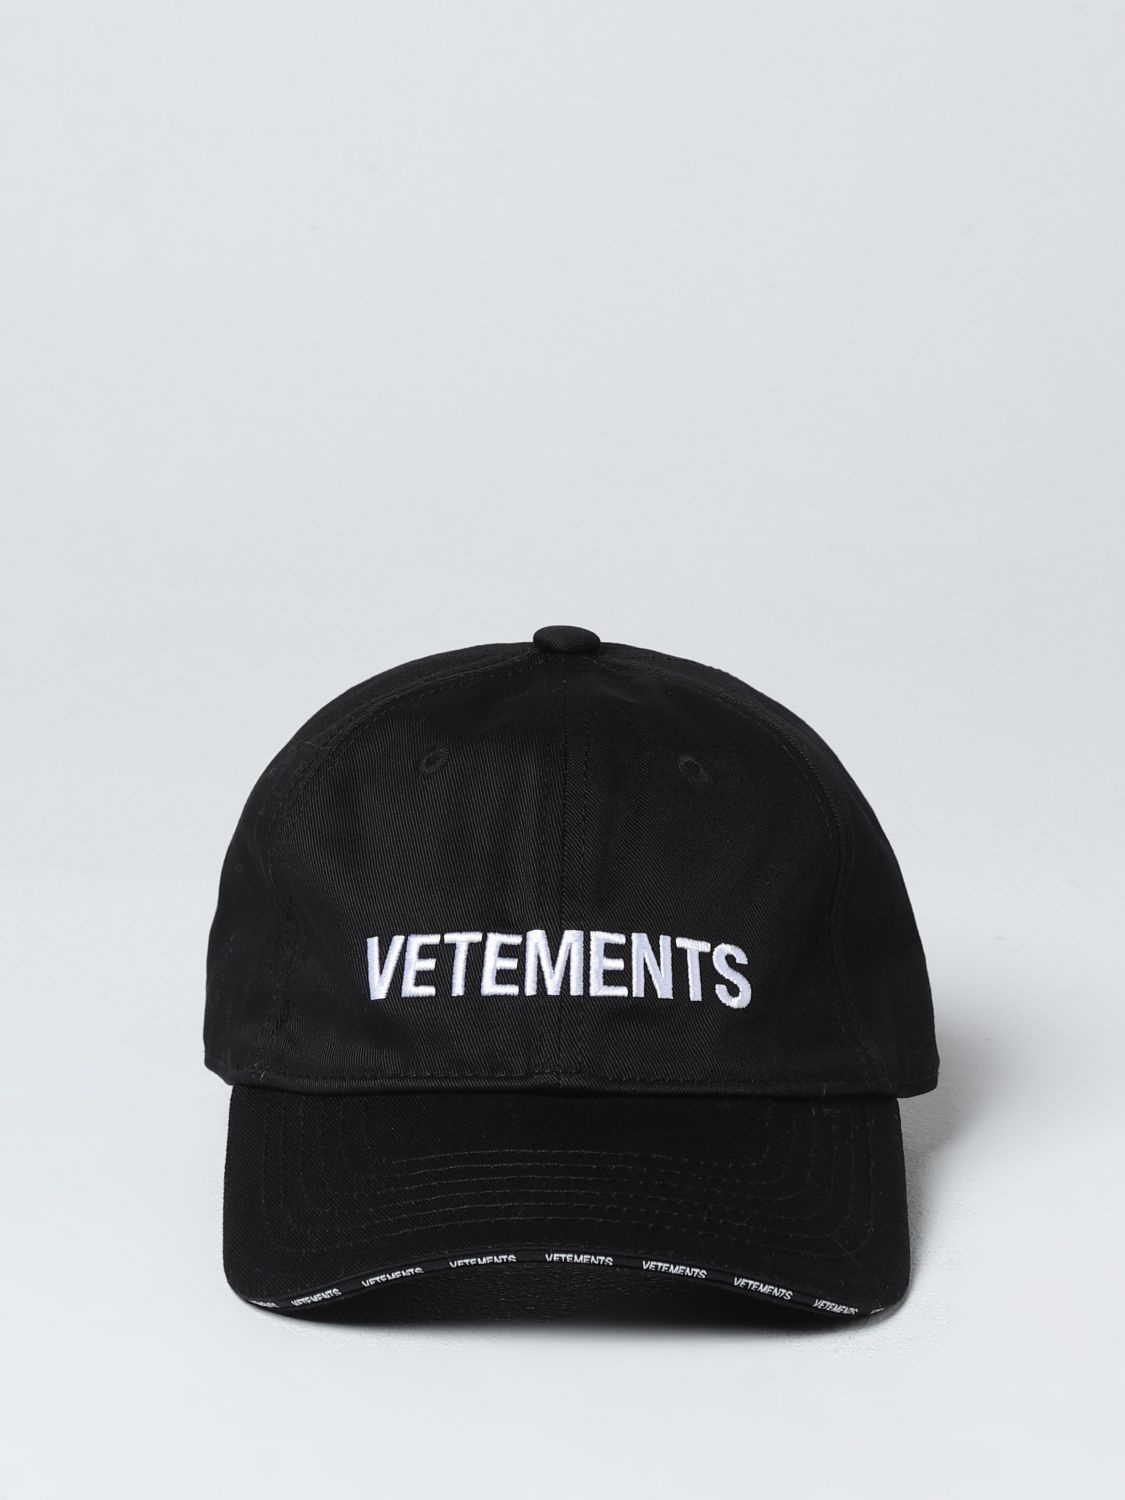 Vetements hat for man - 3